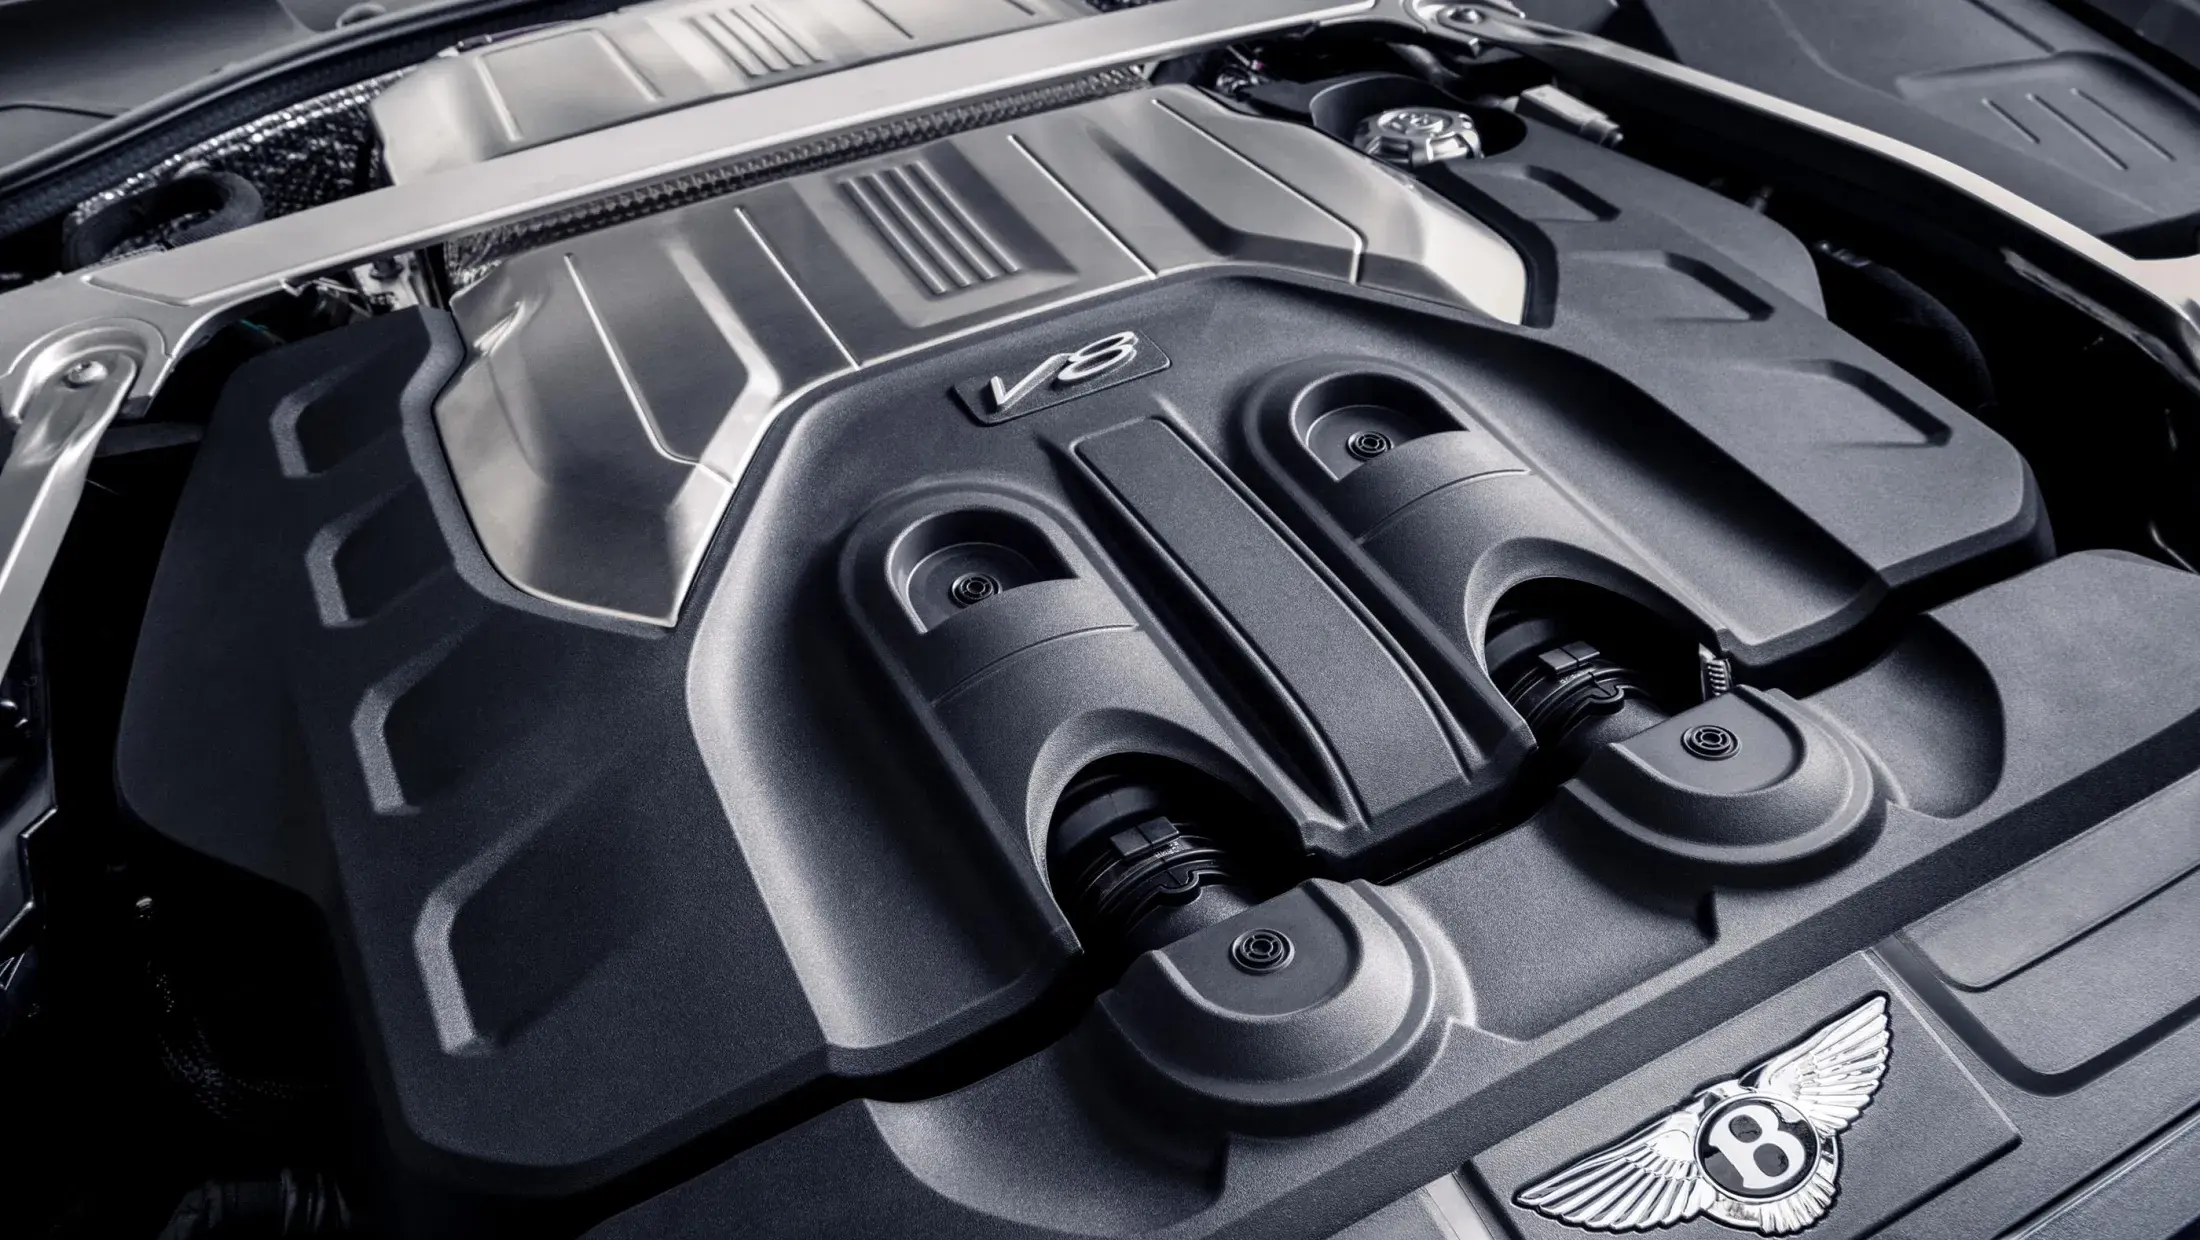 Continental GT V8 engine